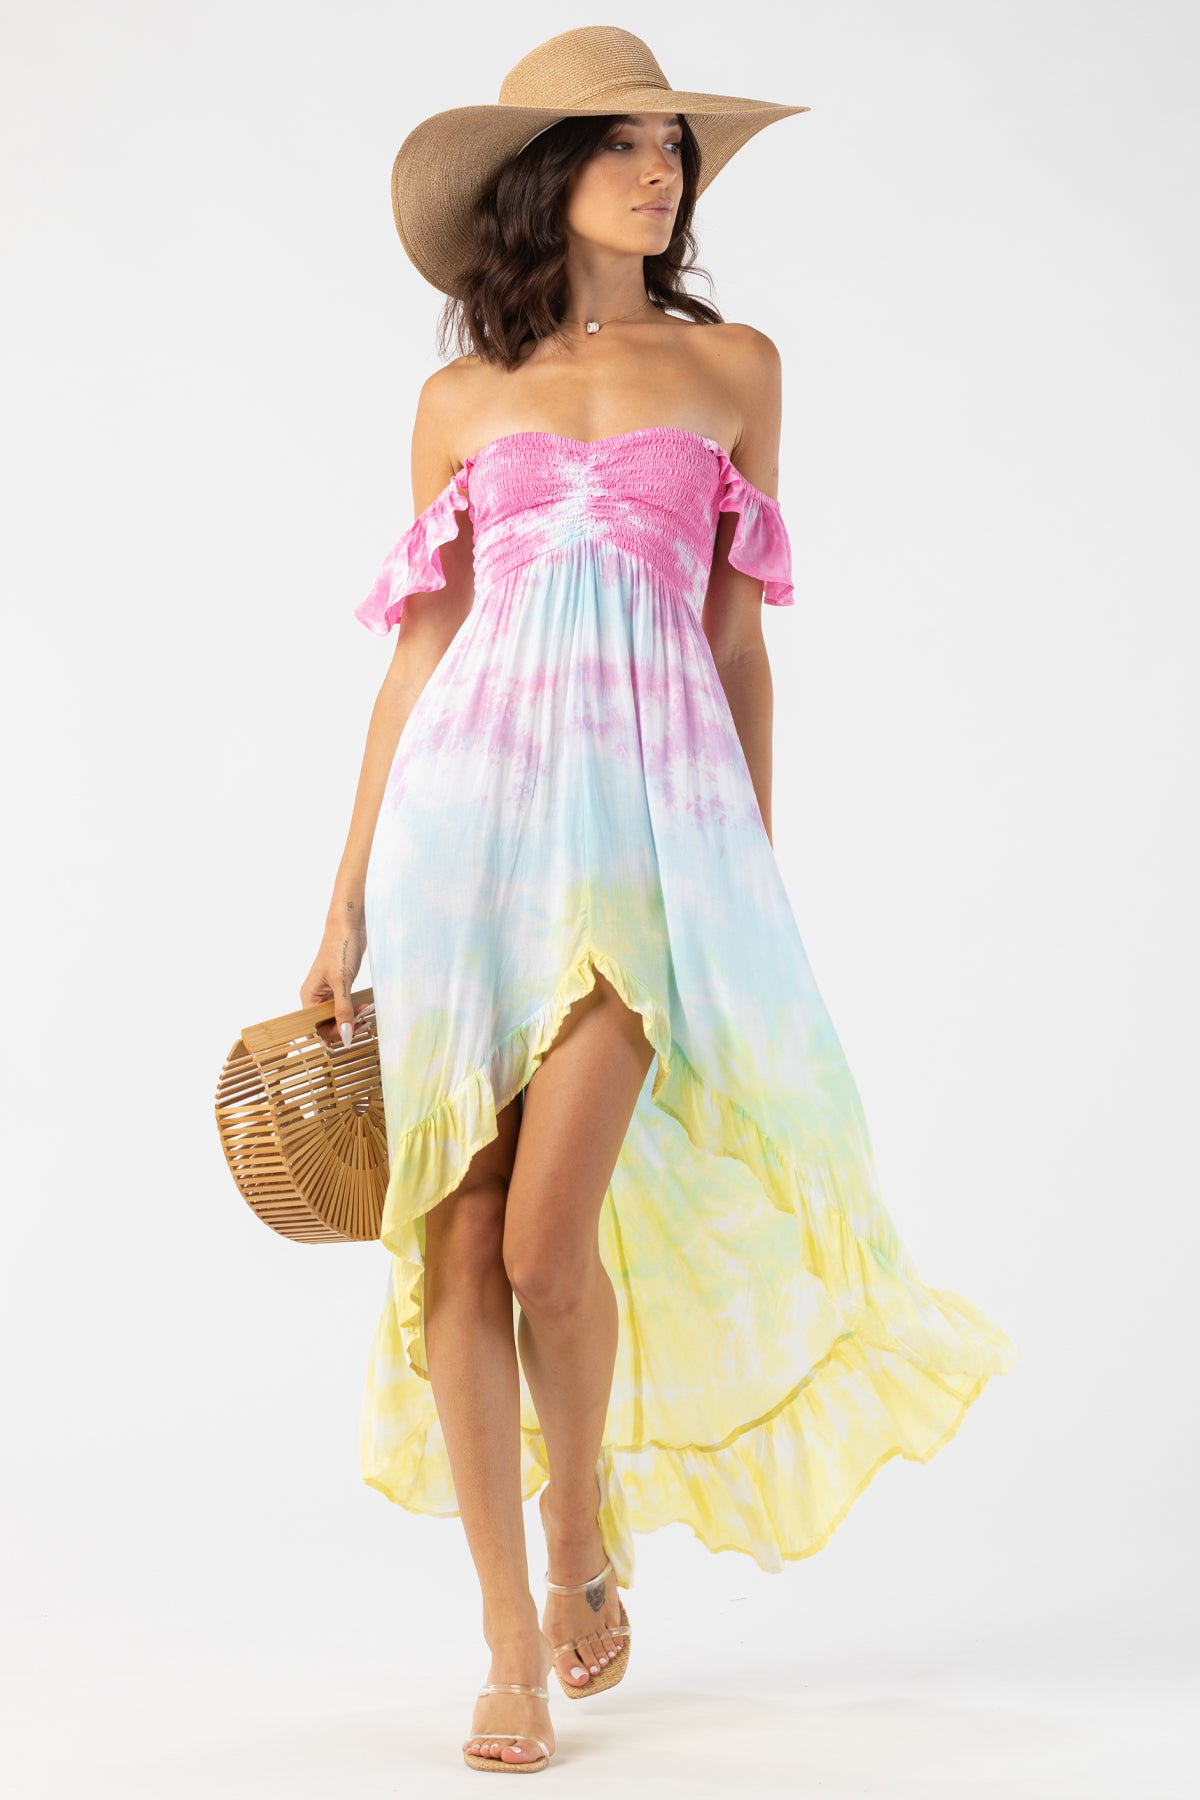 Tiare Hawaii Brooklyn Maxi Dress - Pink Aqua Yellow